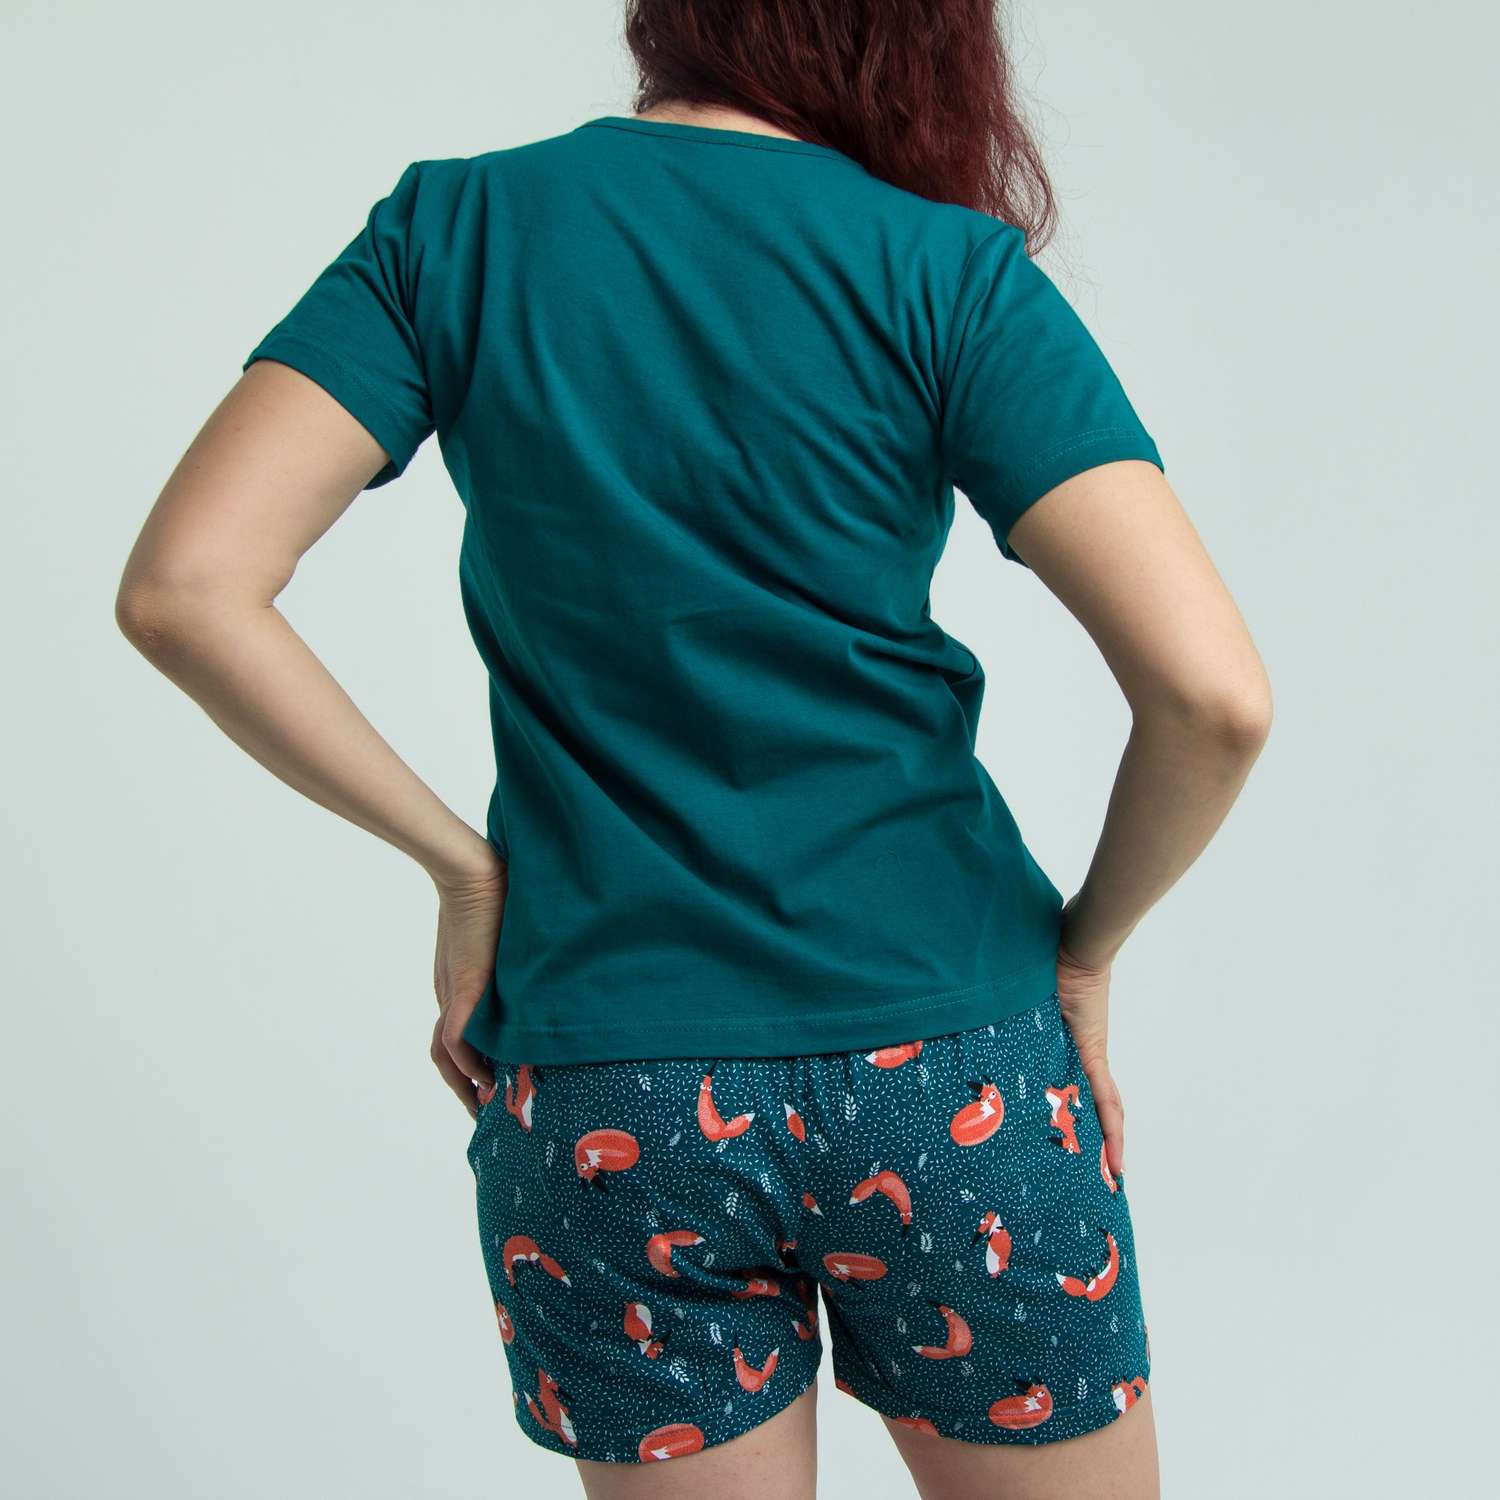 Пижама KARIM Пижама-KGU3014-шорты-футболка/изумруд-лисы - фото 2